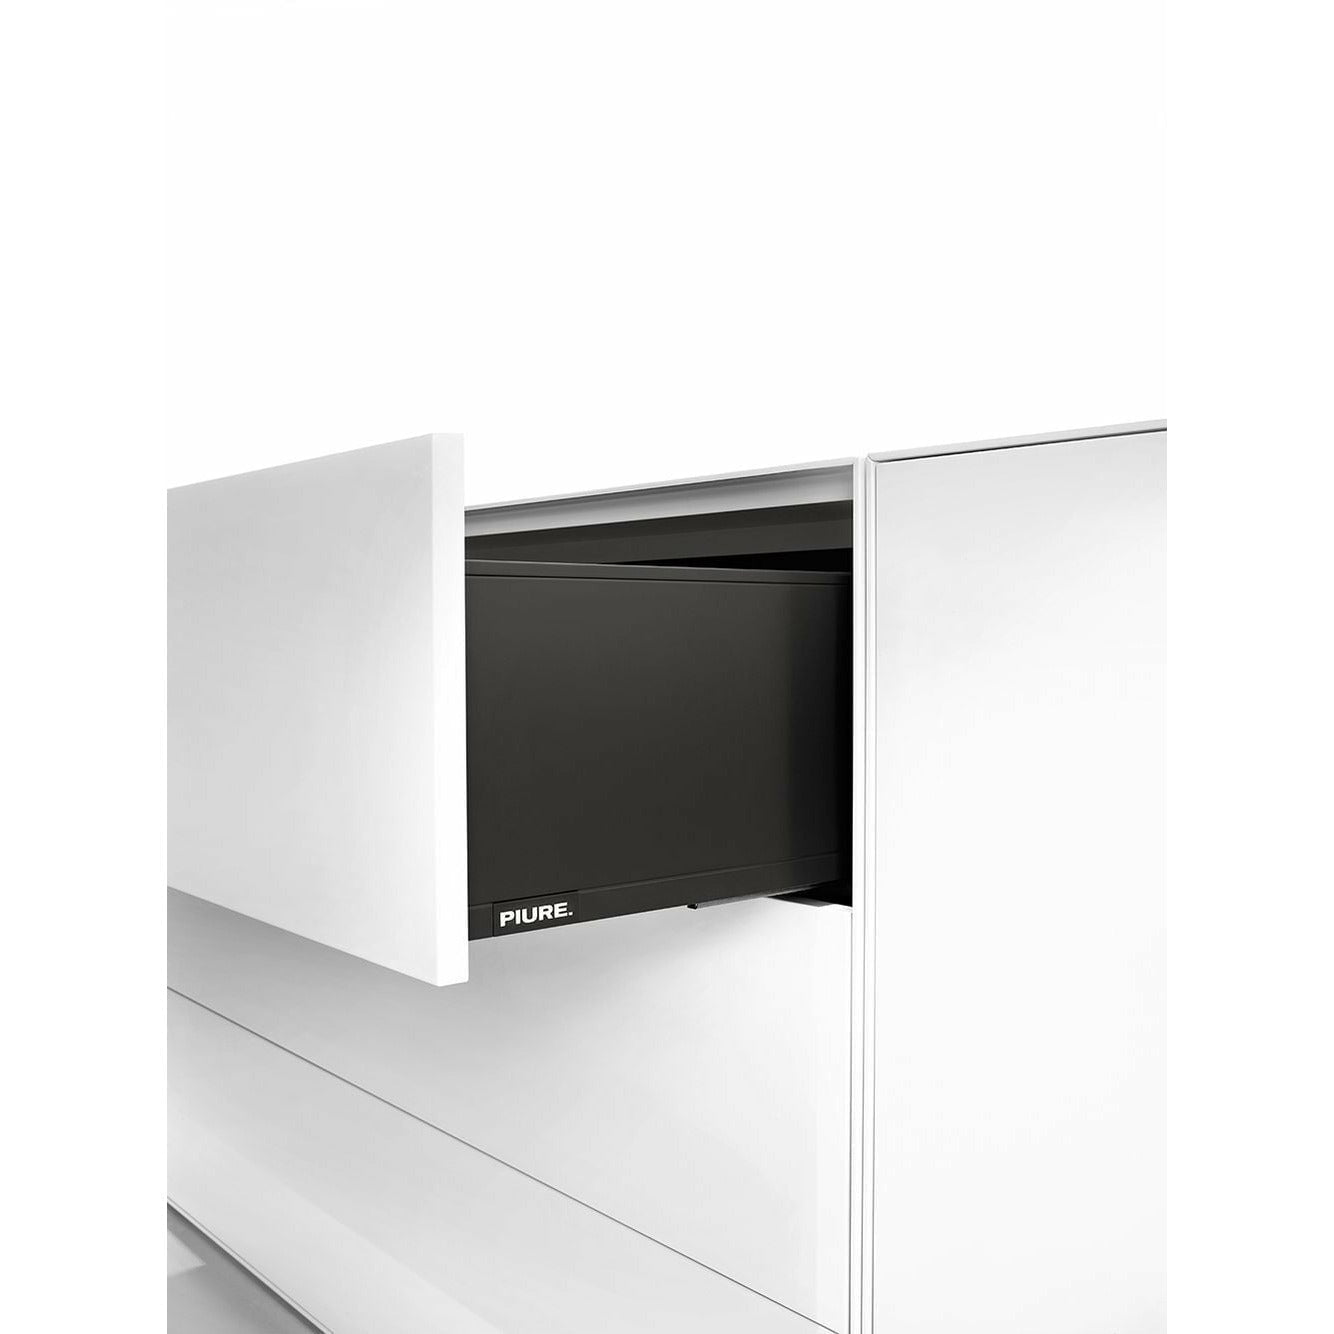 Piure Nex Pur Box Drawer/Door Hx W 50x180 Cm, 2 Shelves/1 Shelf